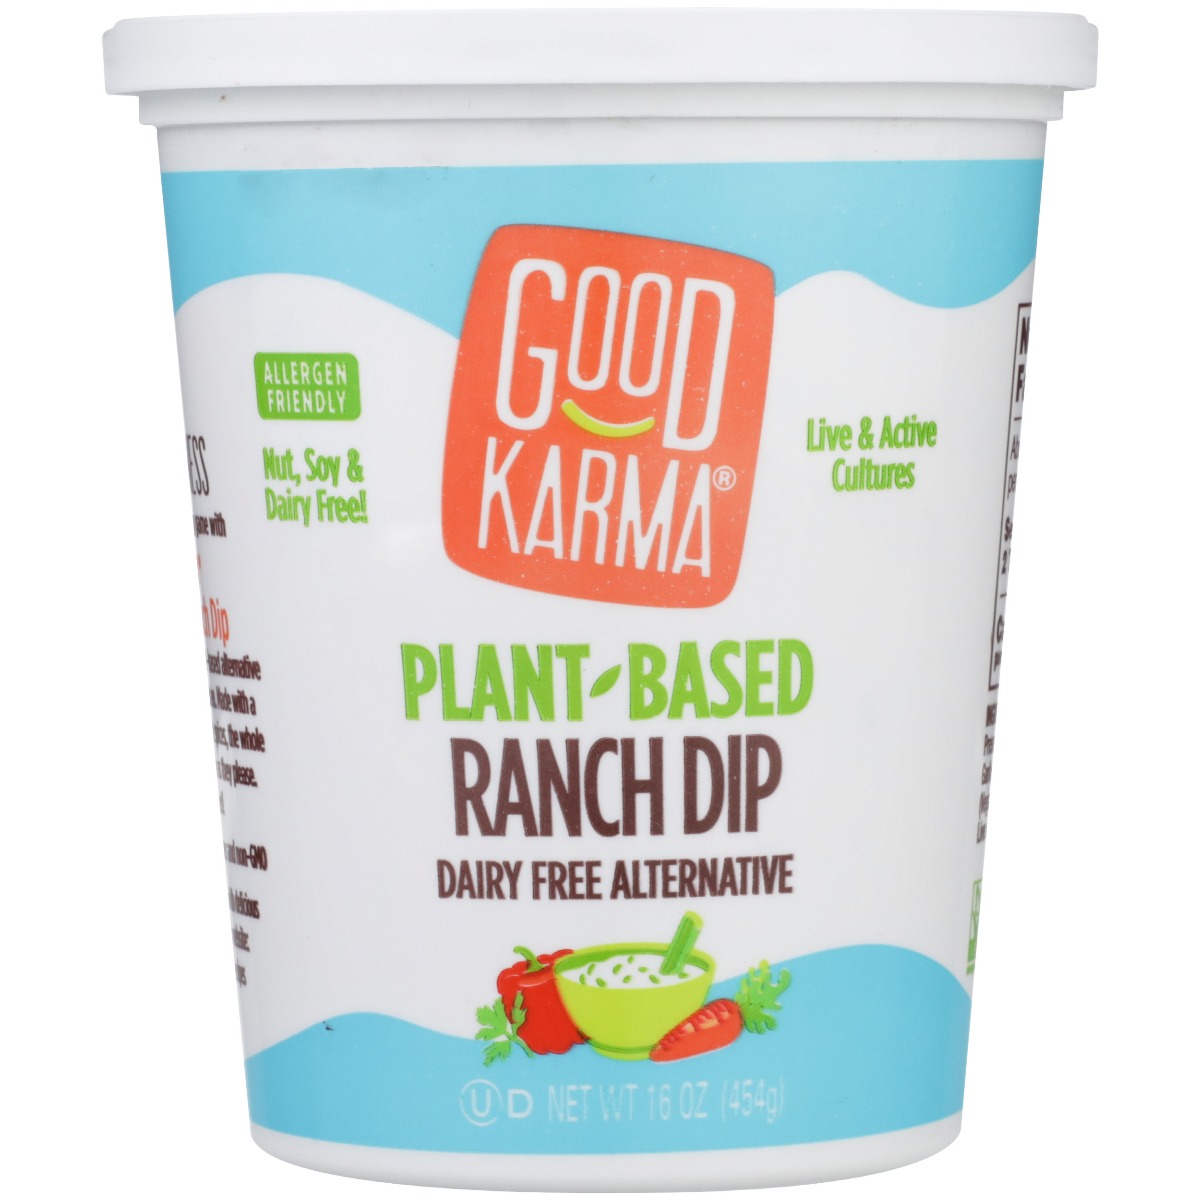 GOOD KARMA: Plant-Based Ranch Dip, 16 oz - 0829462503023